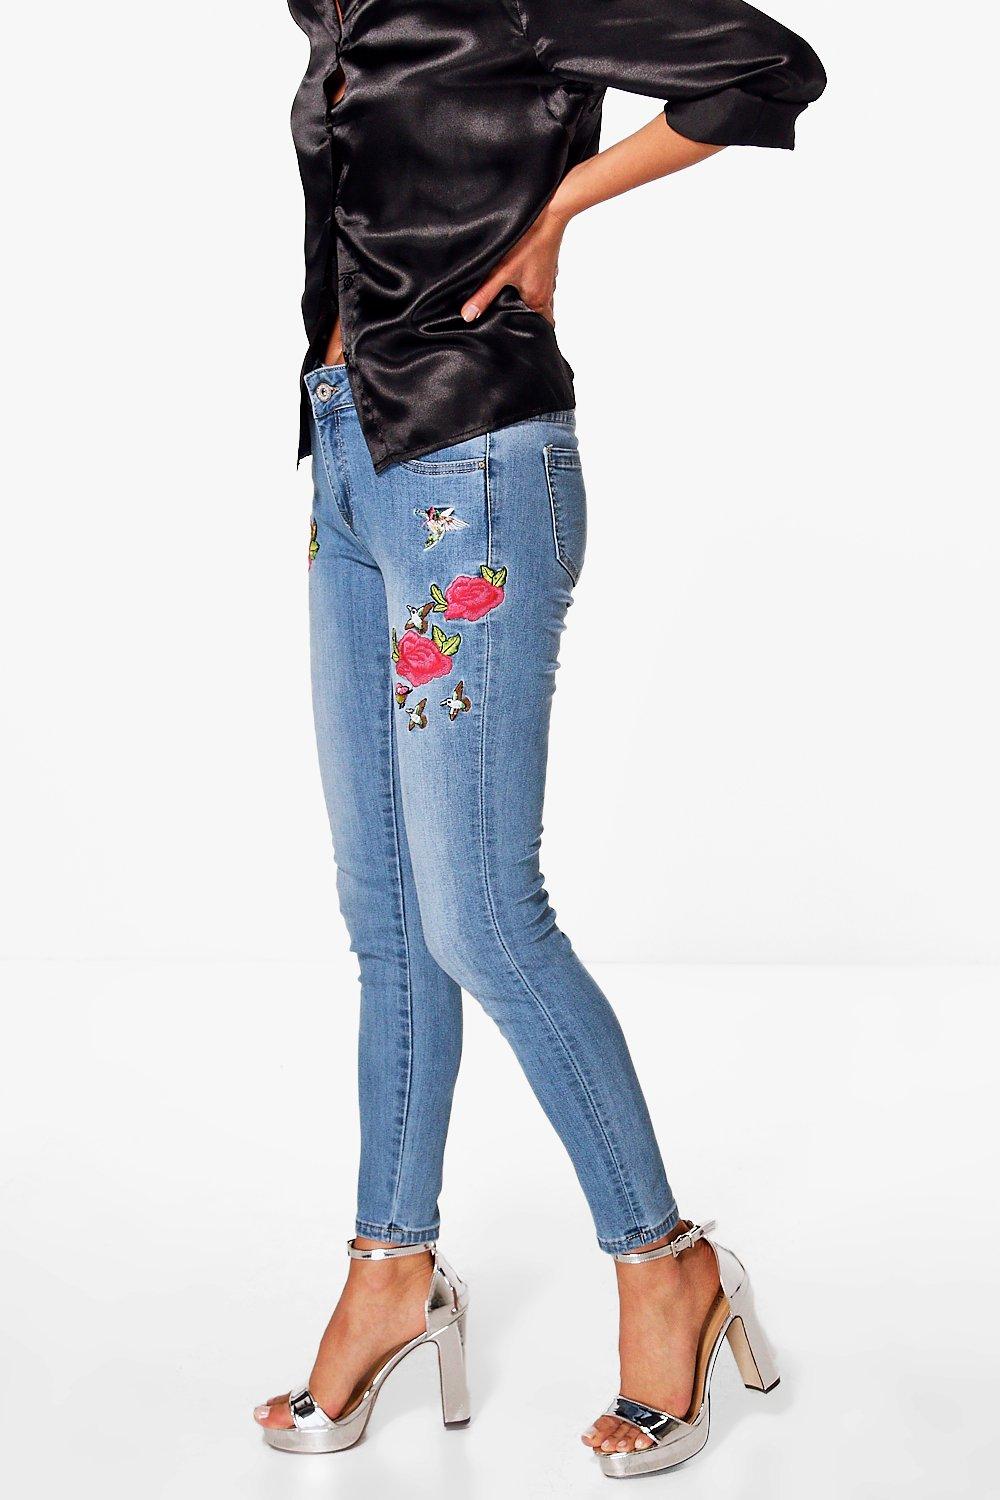 floral denim jeans